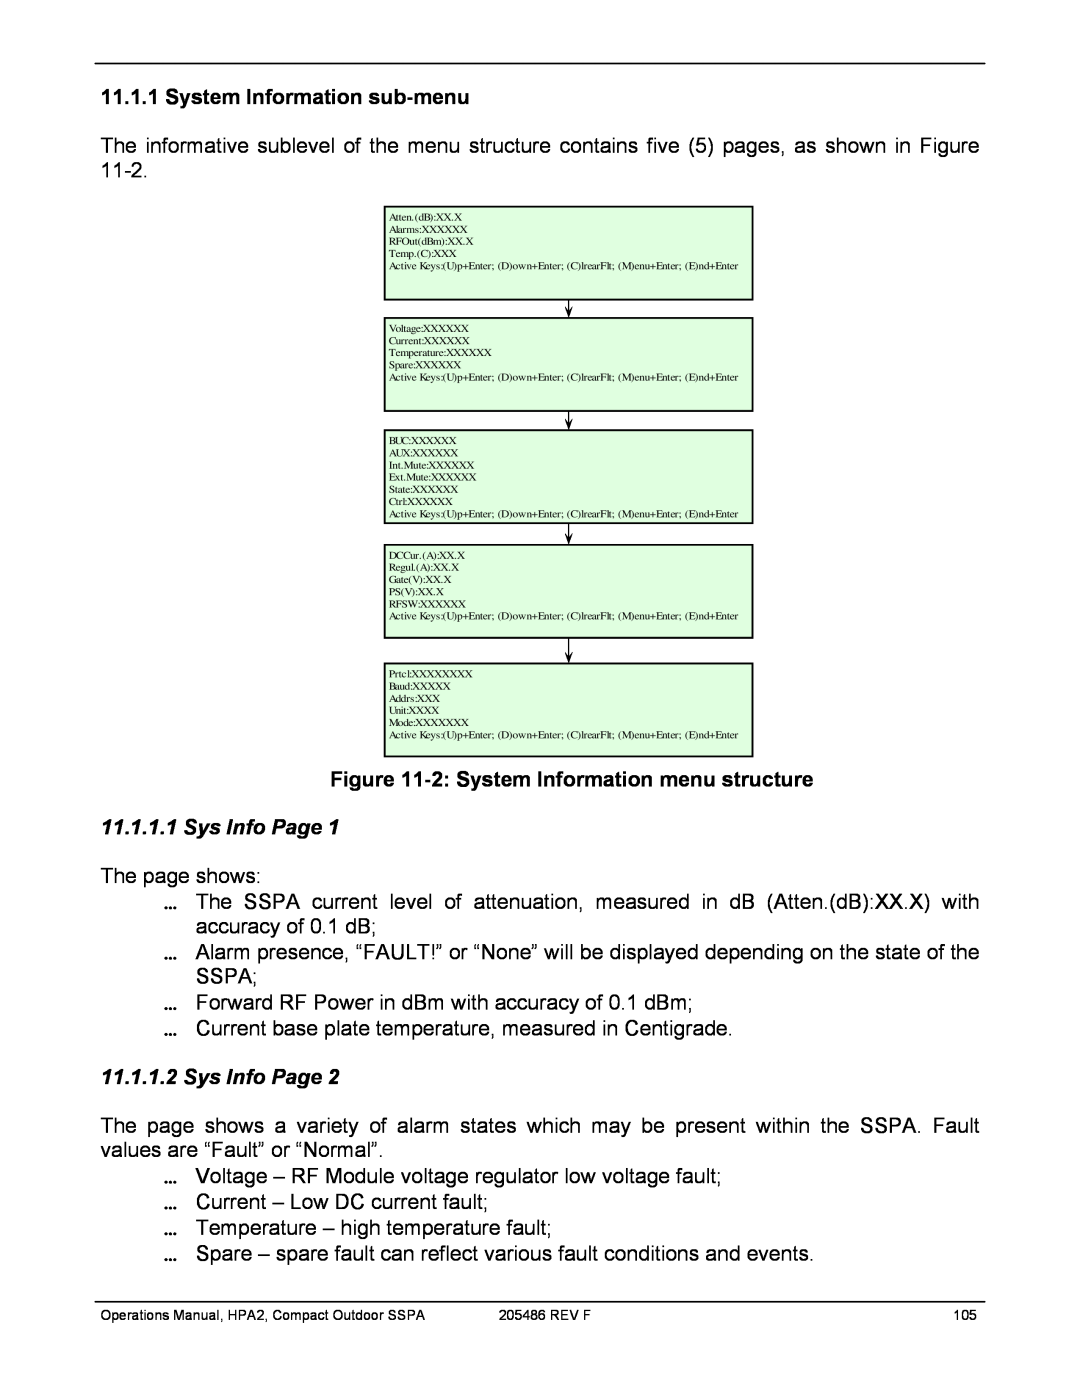 Paradise 205486 REV F manual System Information sub-menu, 2:System Information menu structure, Sys Info Page 